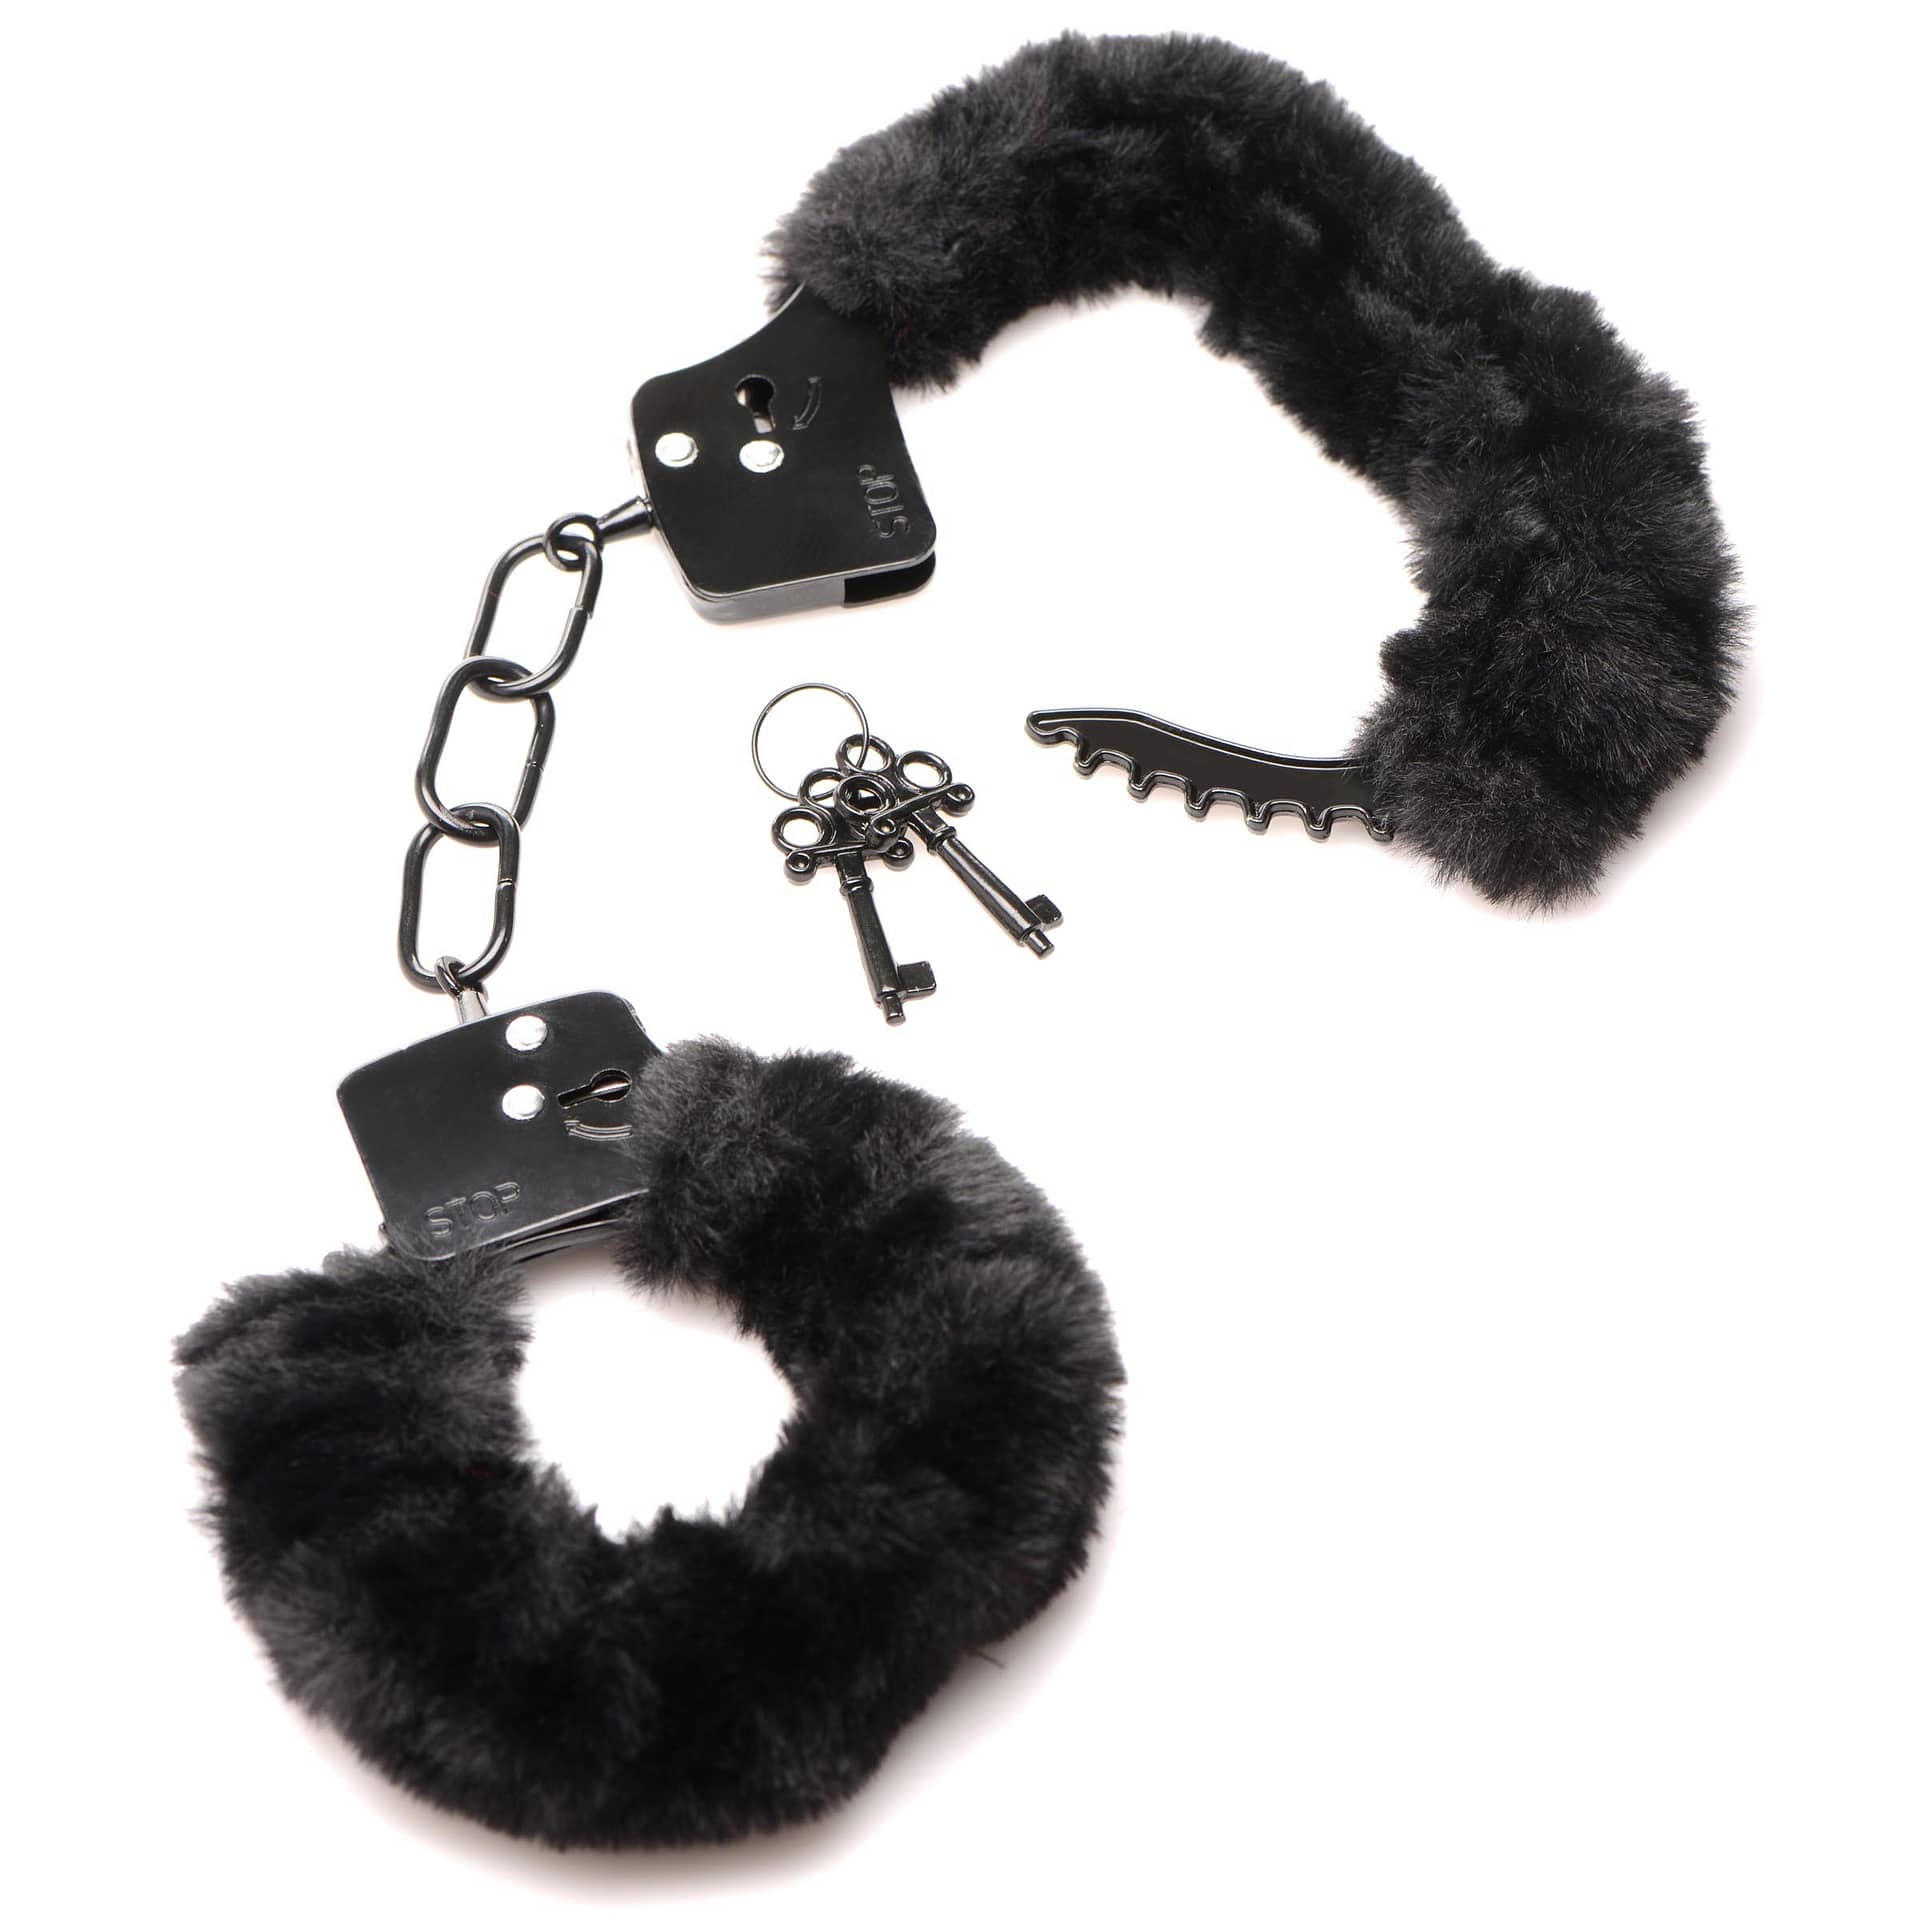 Cuffed In Fur Furry Handcuffs Black The Bdsm Toy Shop